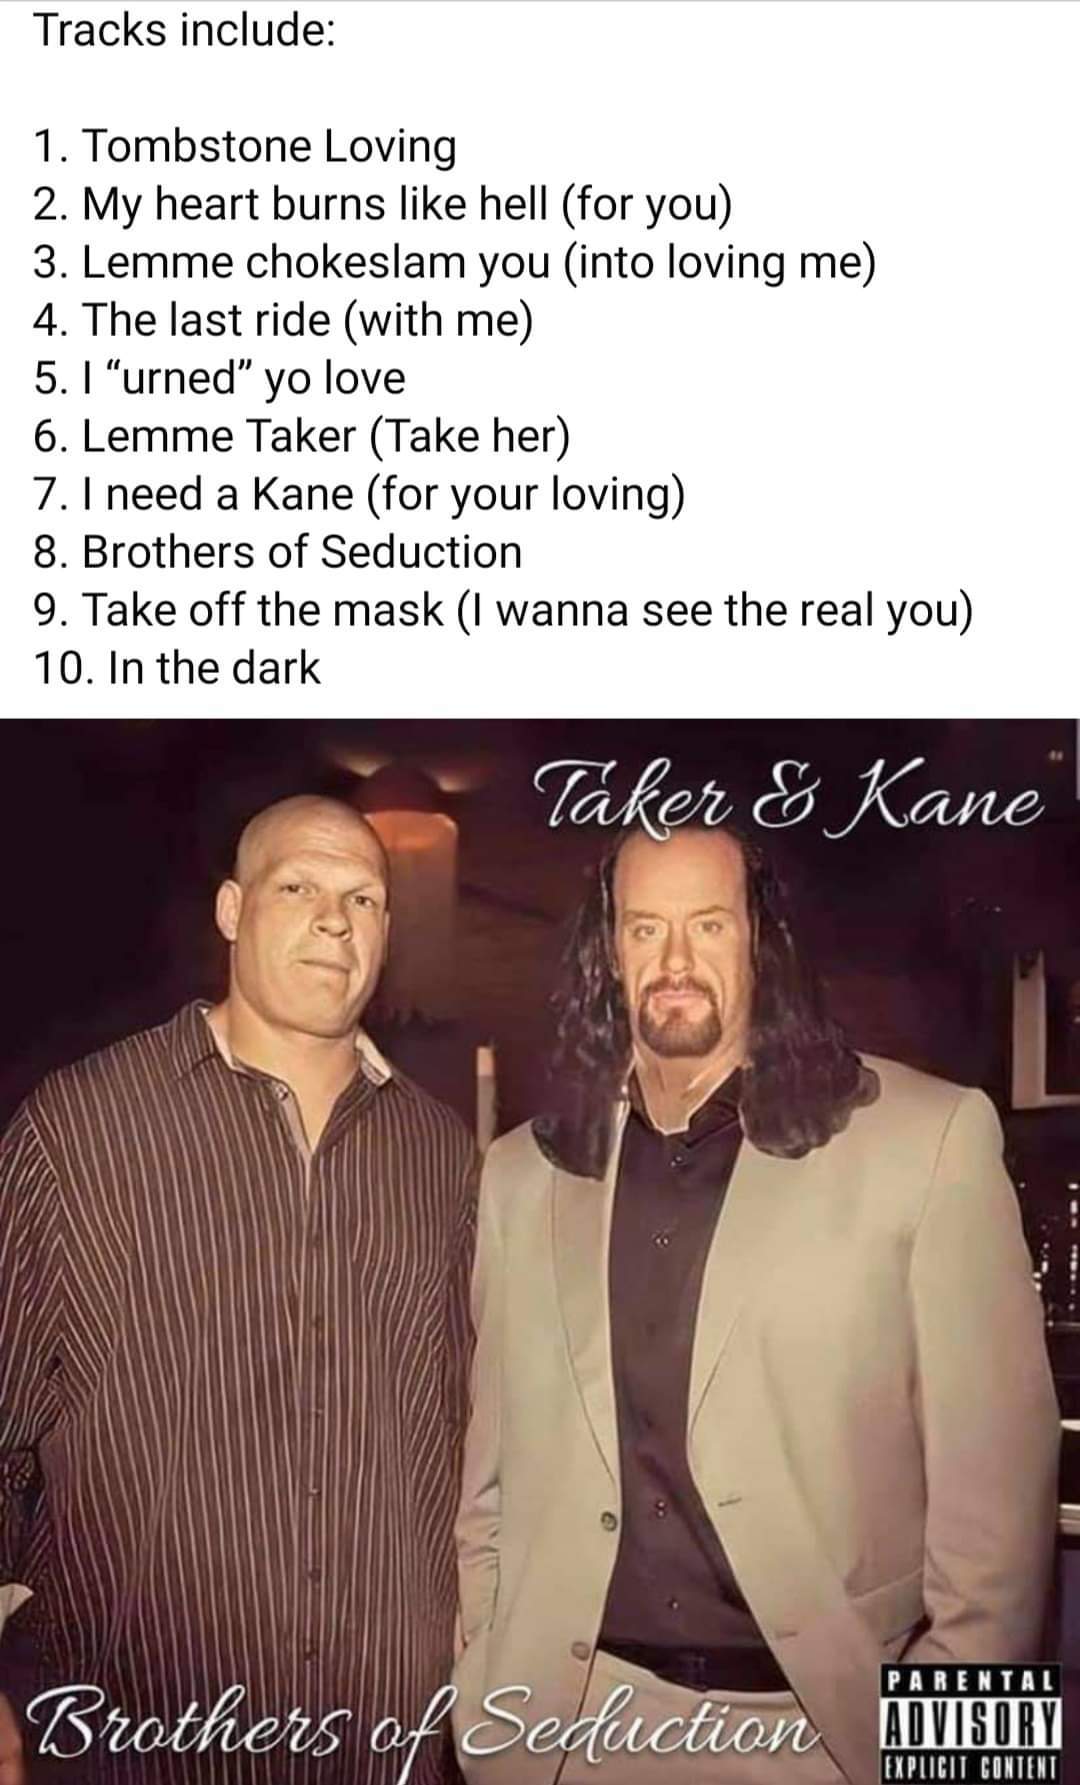 Brothers of seduction - meme